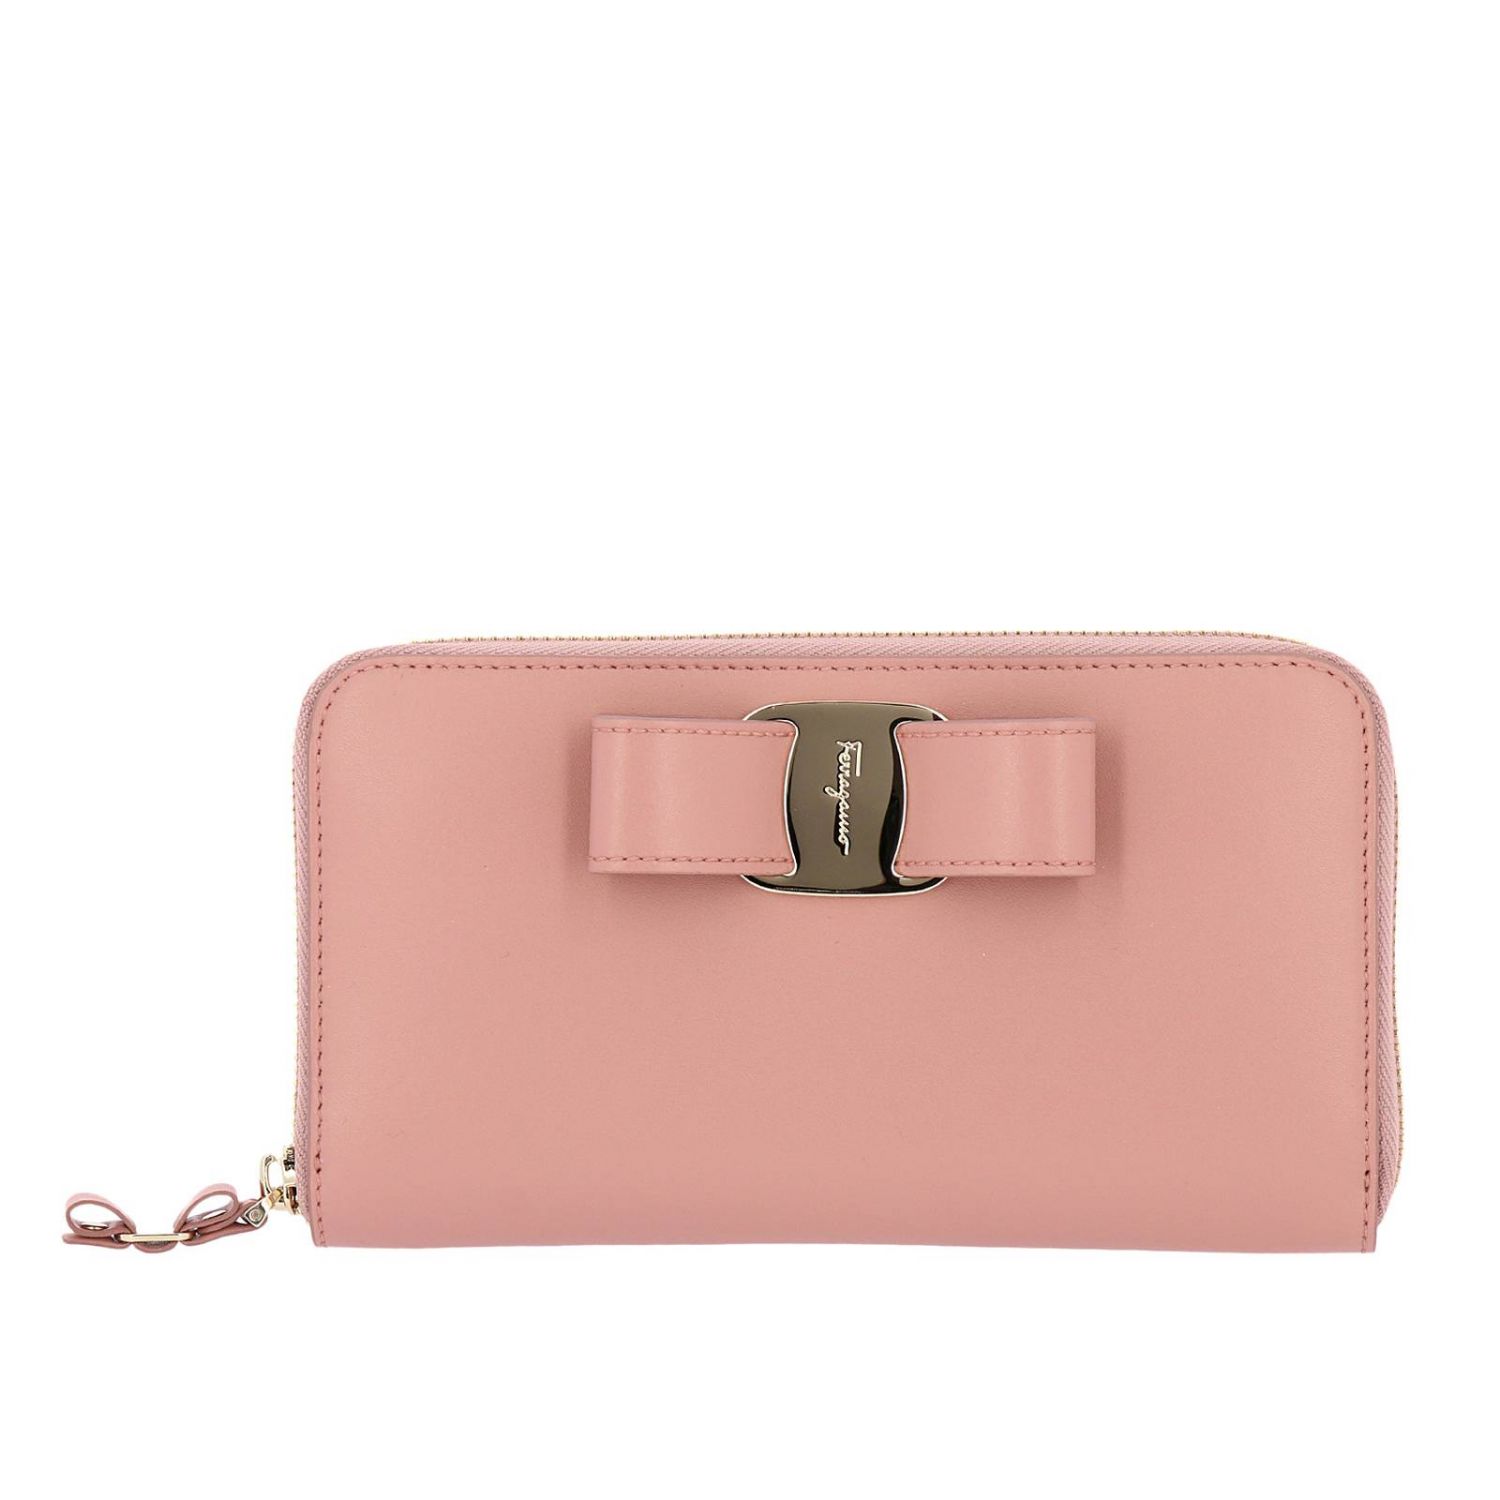 Salvatore Ferragamo Outlet: Wallet women - Pink | Wallet Salvatore ...